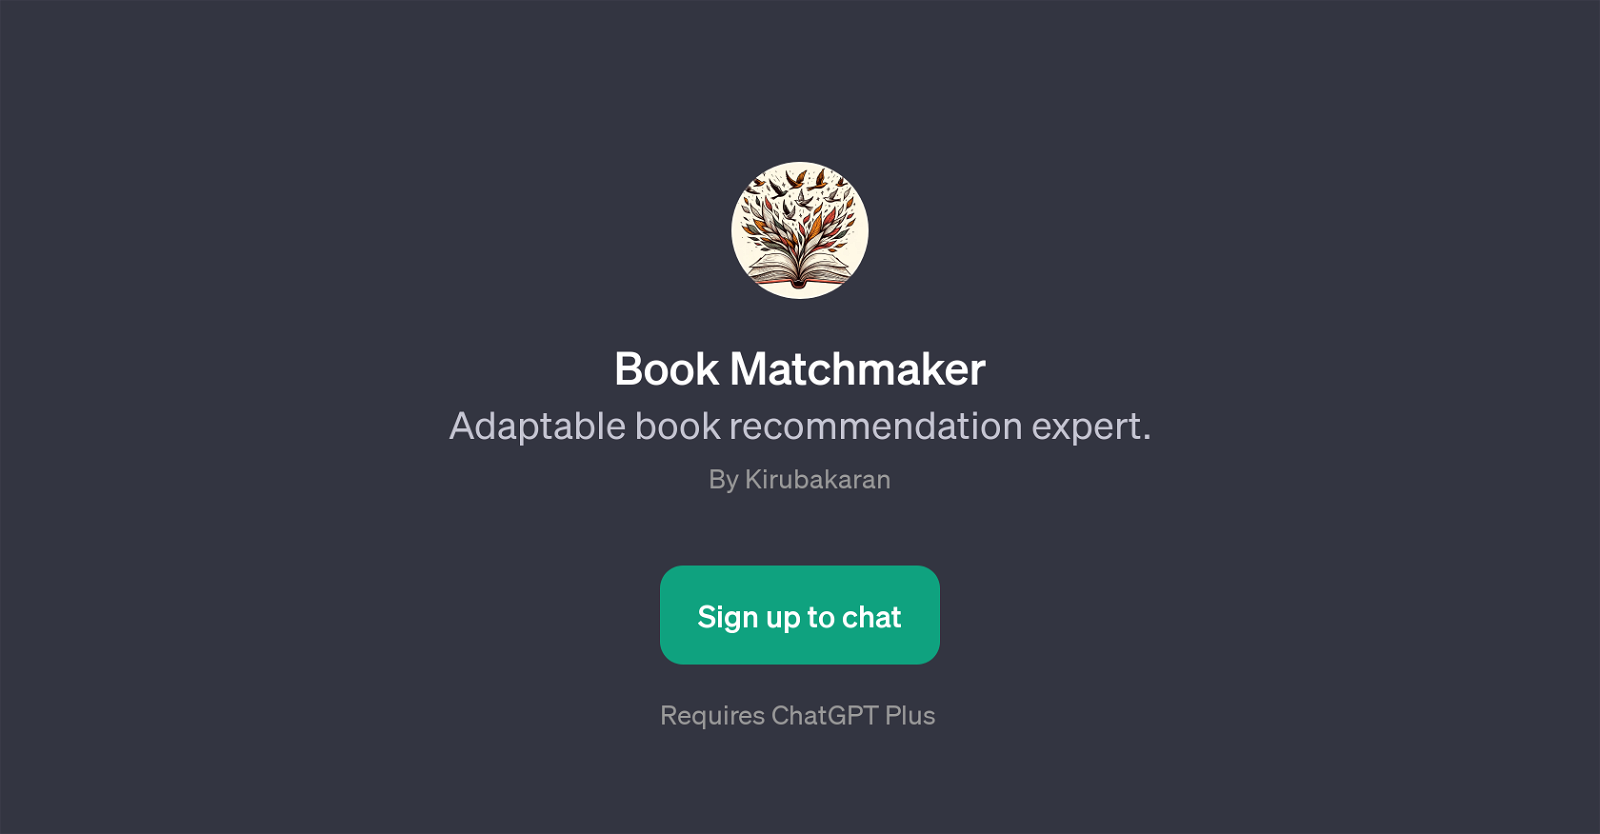 Book Matchmaker website